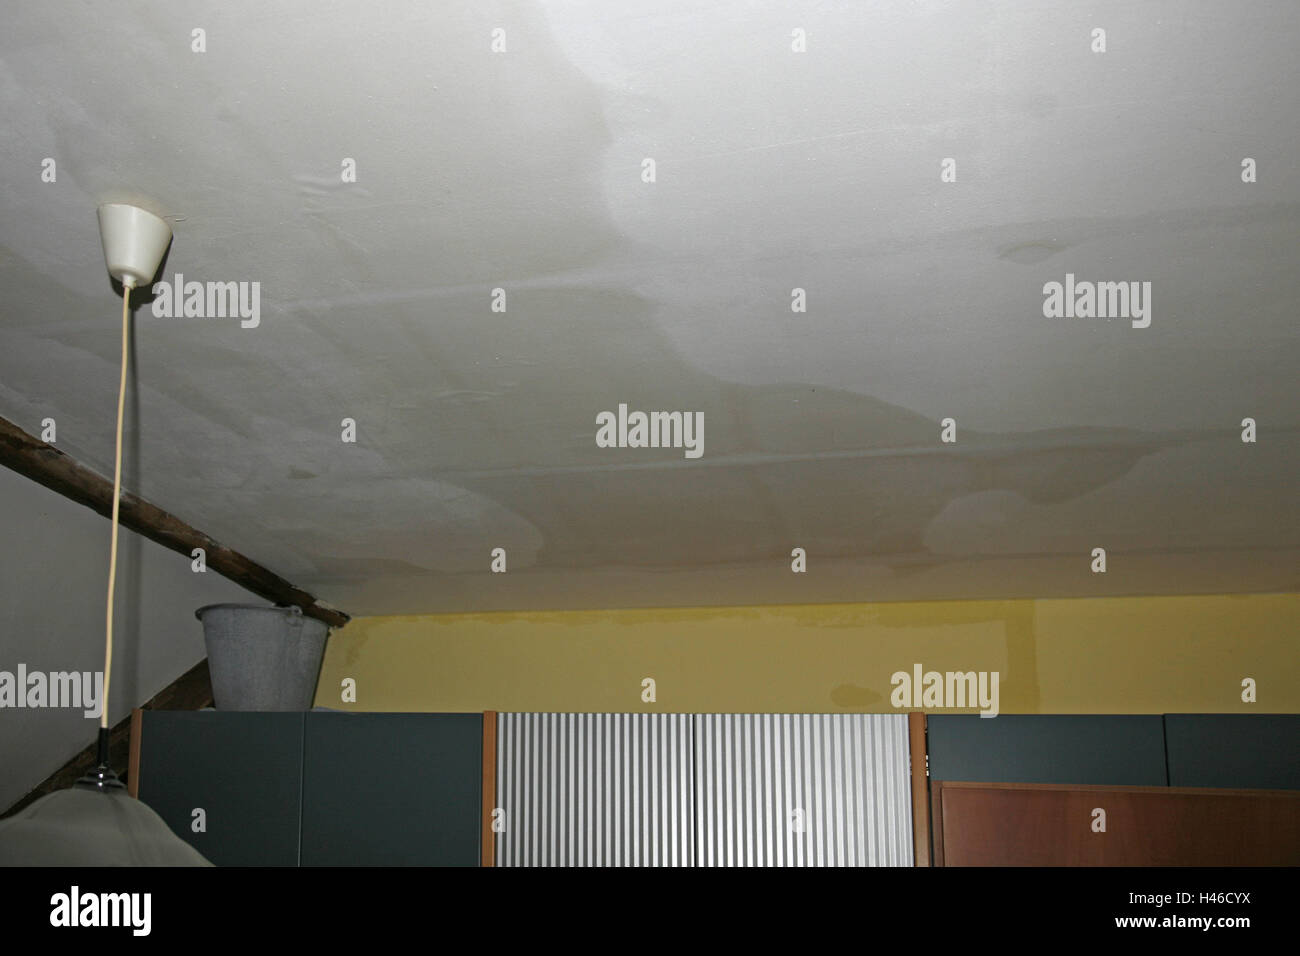 Flat Room Caps Water Damage Damage Building Ceiling